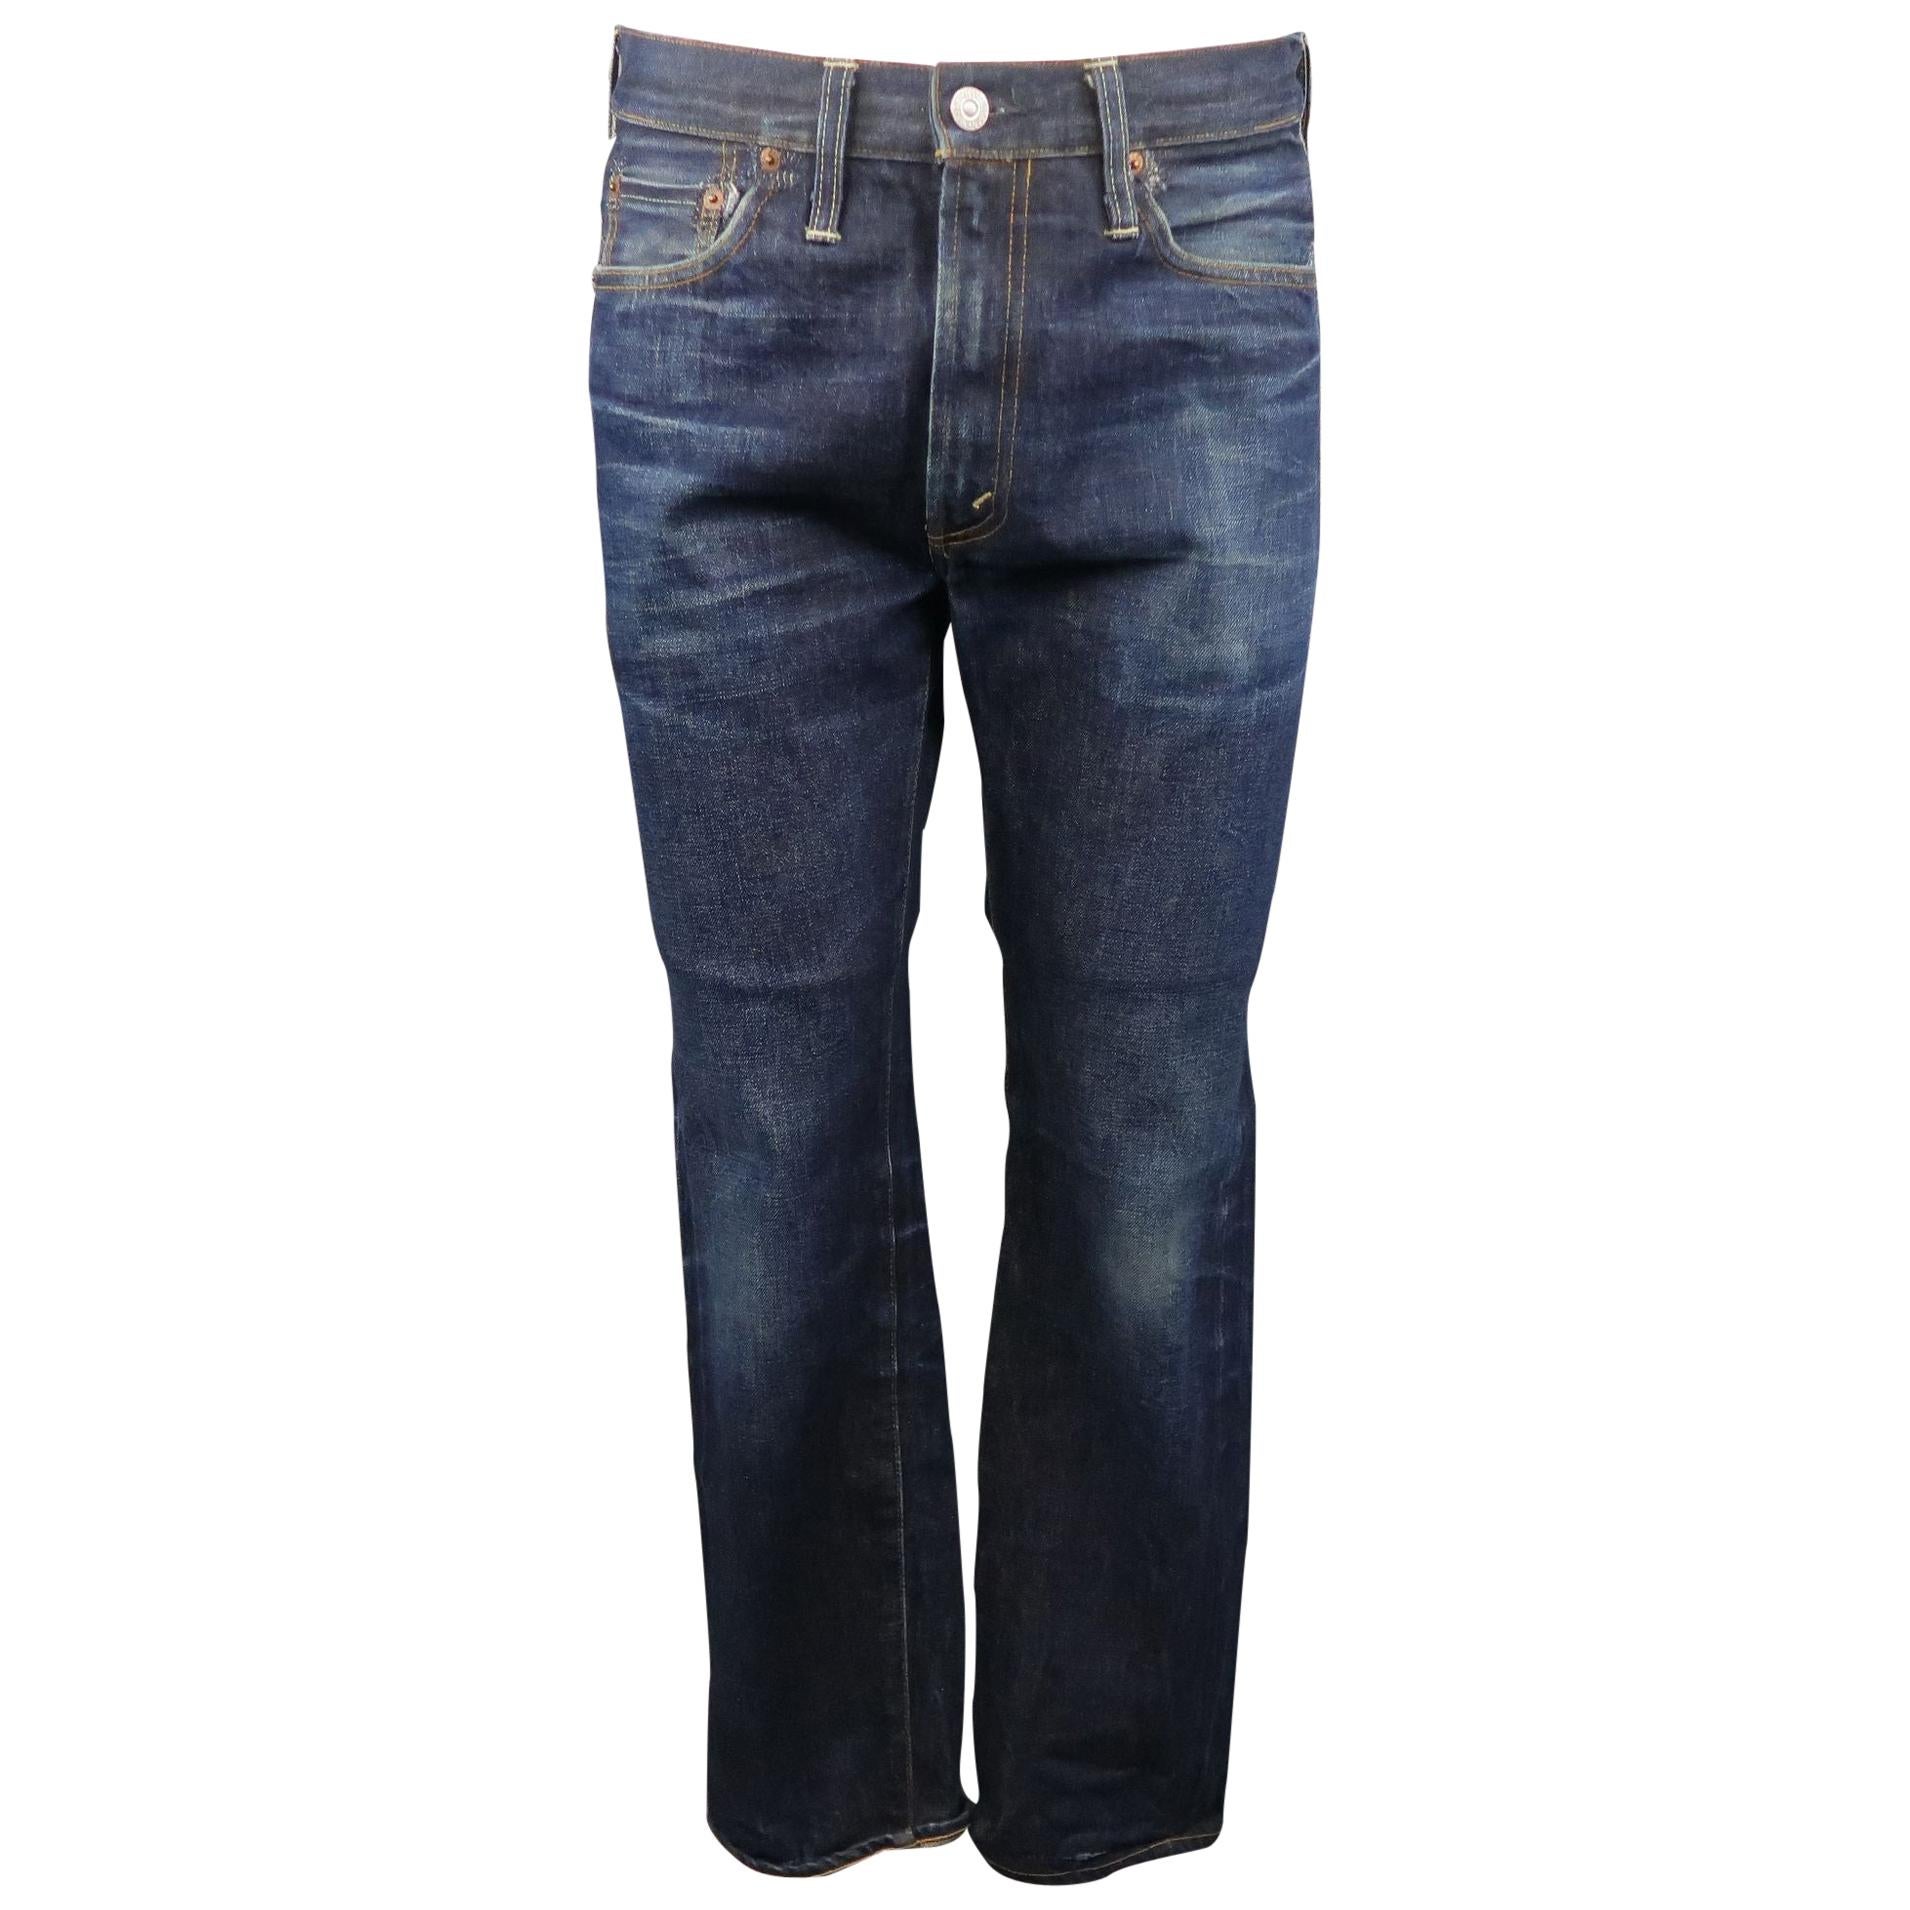 LEVI'S Size 32 Indigo Contrast Stitch Selvedge Denim Jeans